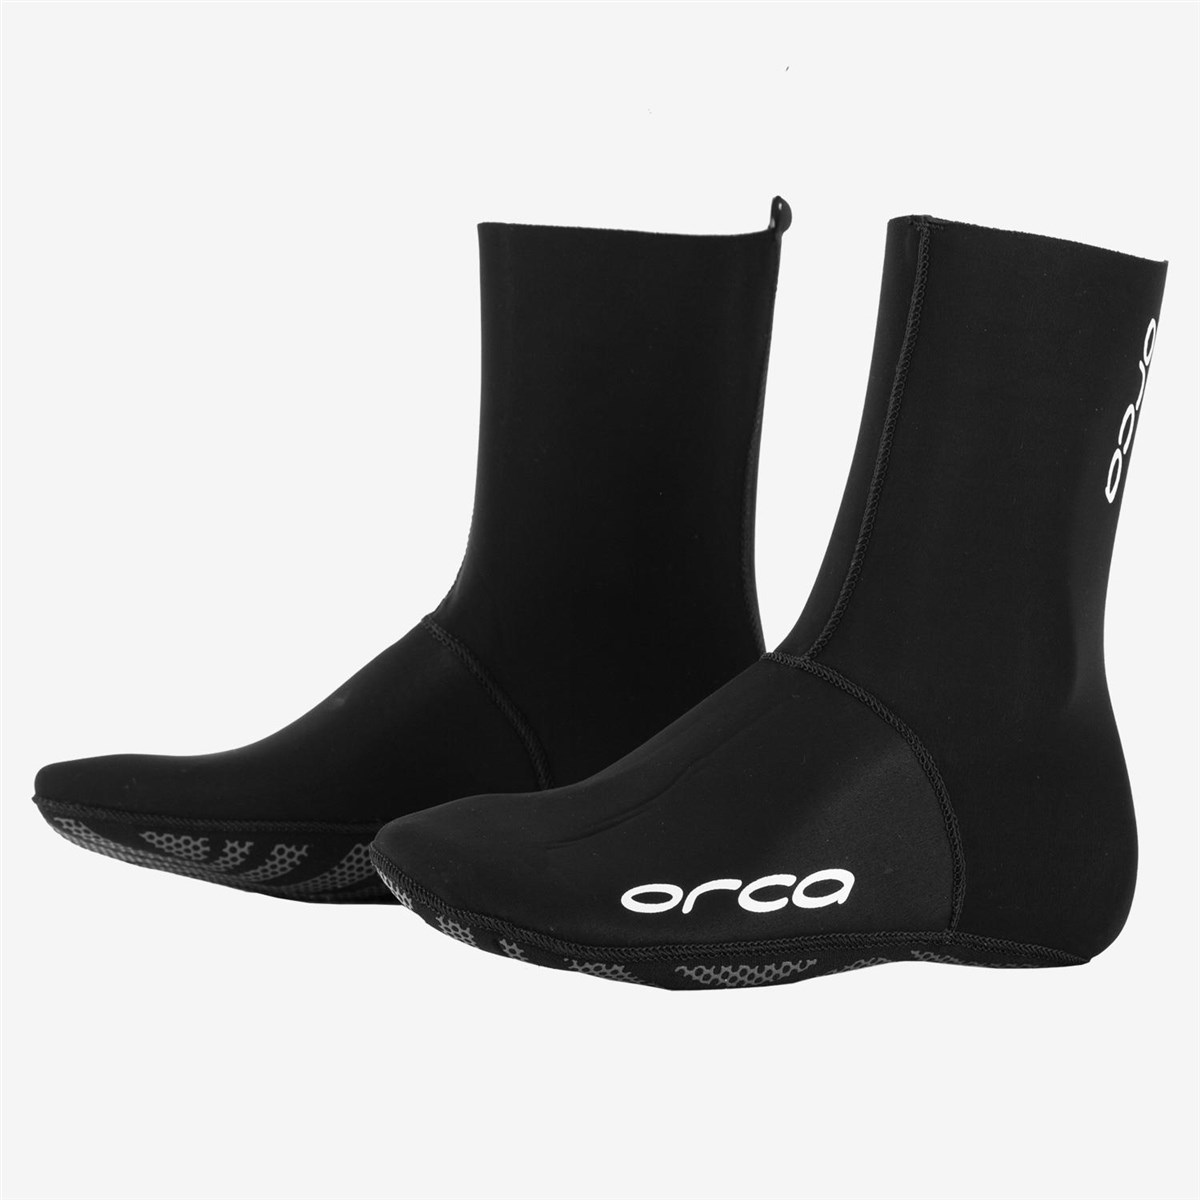 Orca Swim Socks product image